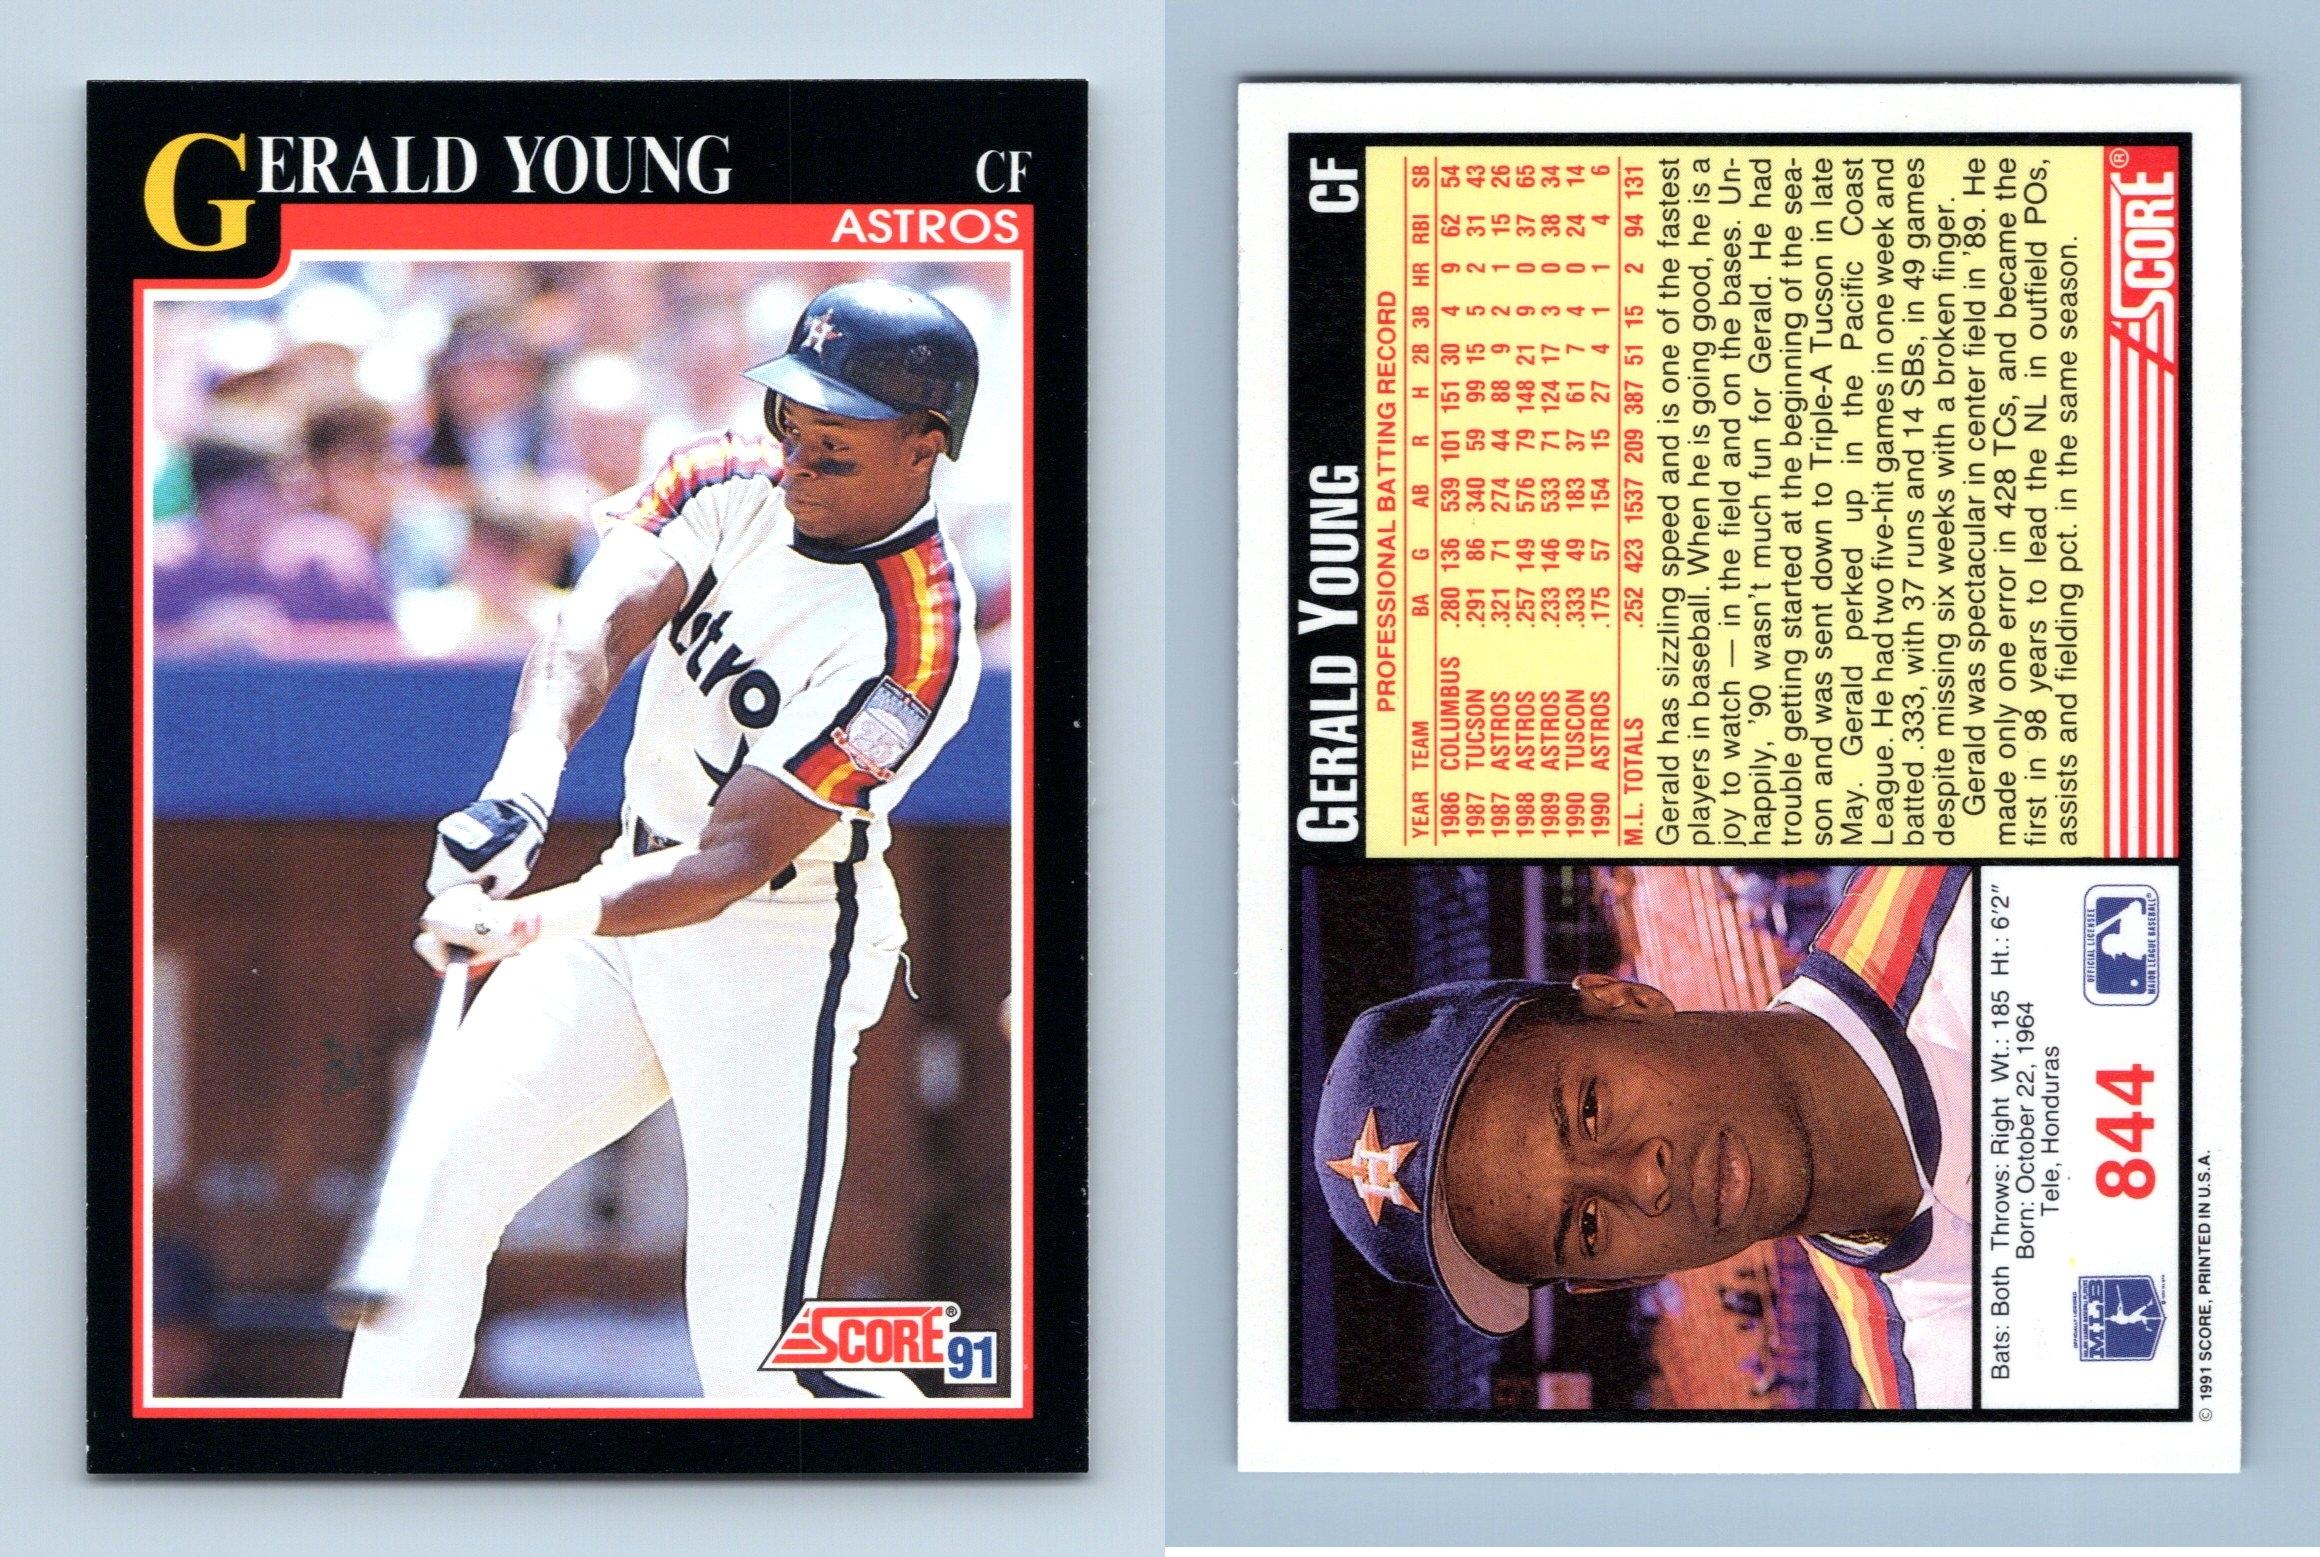  1991 Score Baseball Card #878 Doug Drabek CY